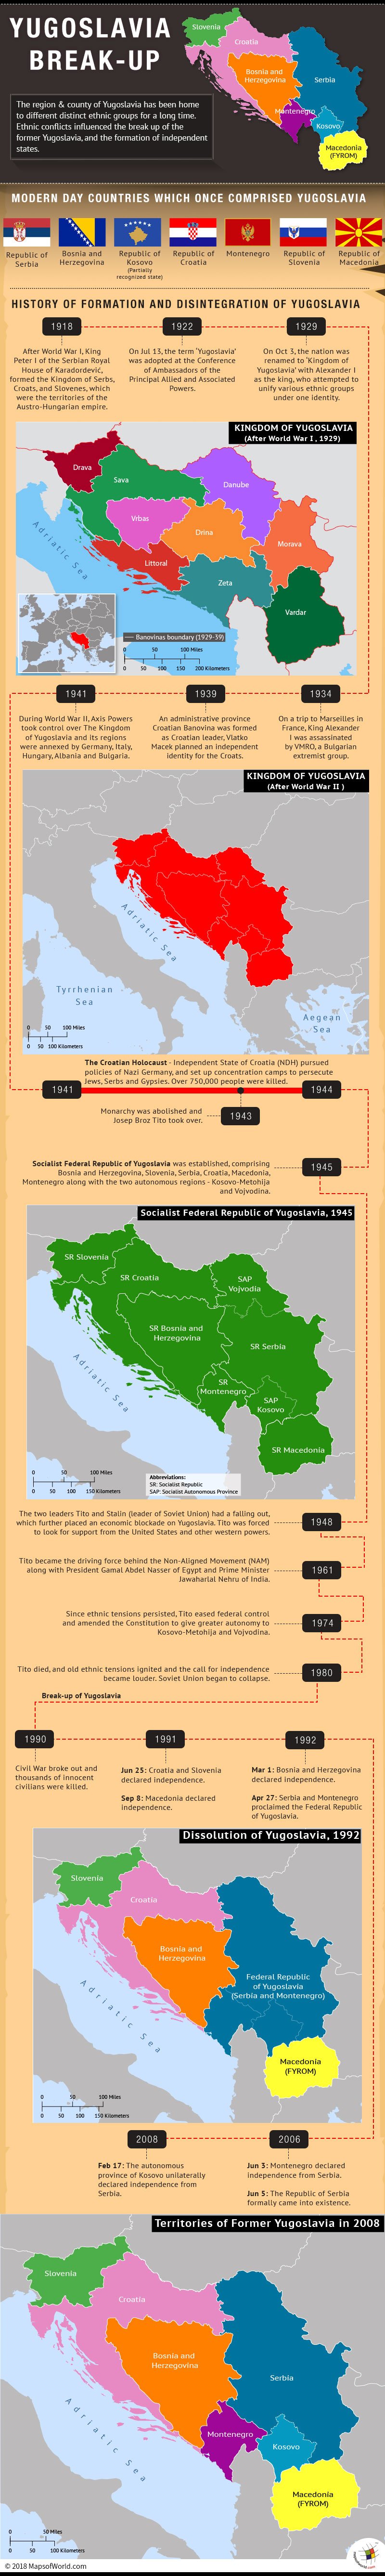 Infographic describing Break-up of Yugoslavia